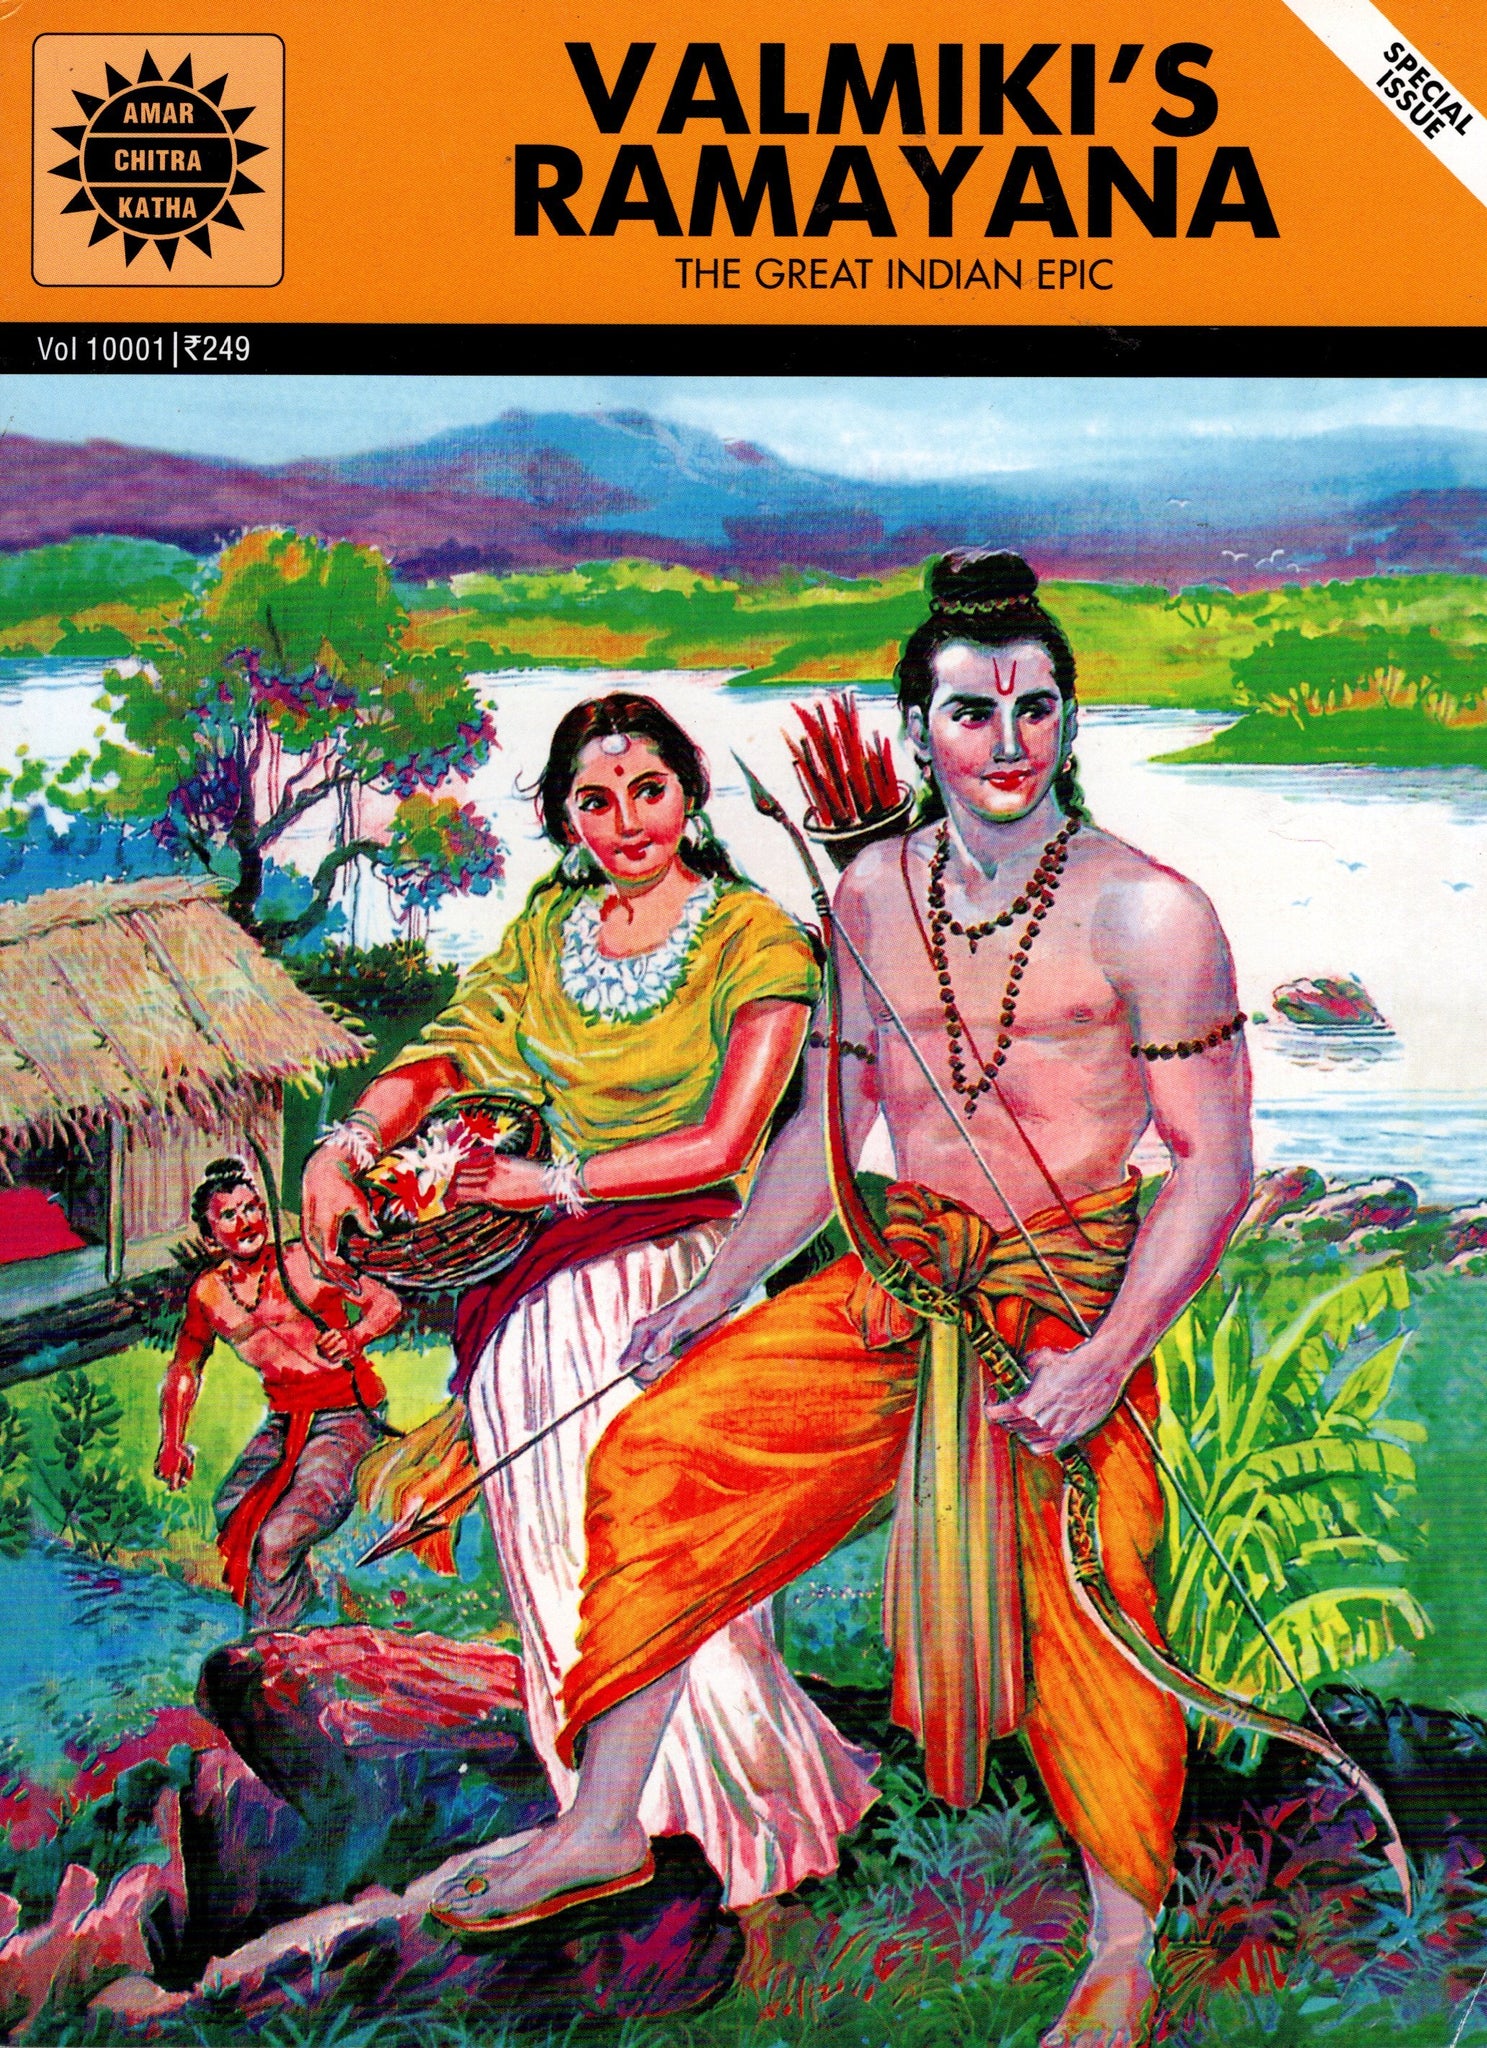 Valmiki's Ramayana - The great Indian epic